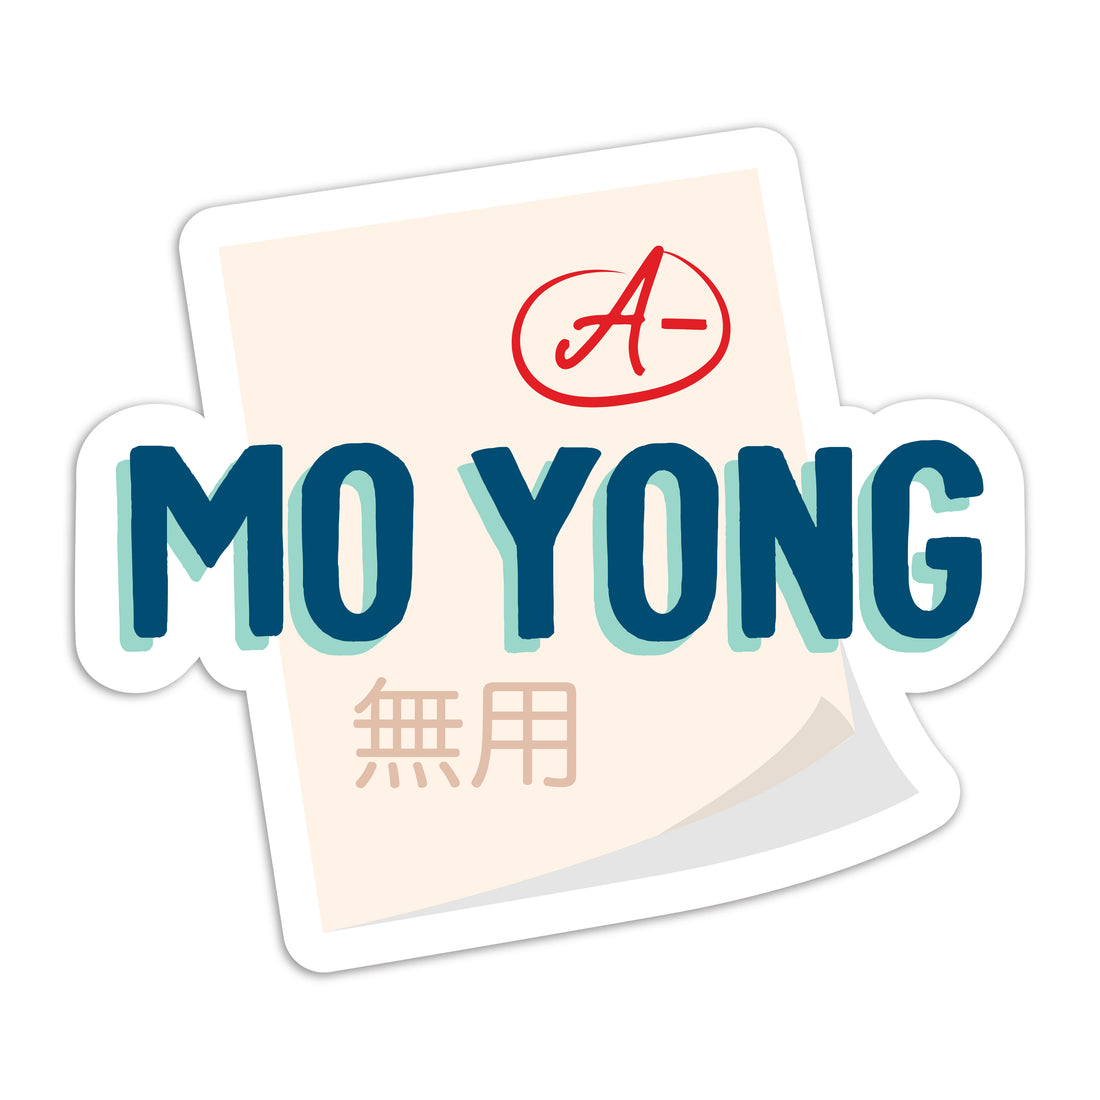 Mo yong (無用) vinyl sticker by I&